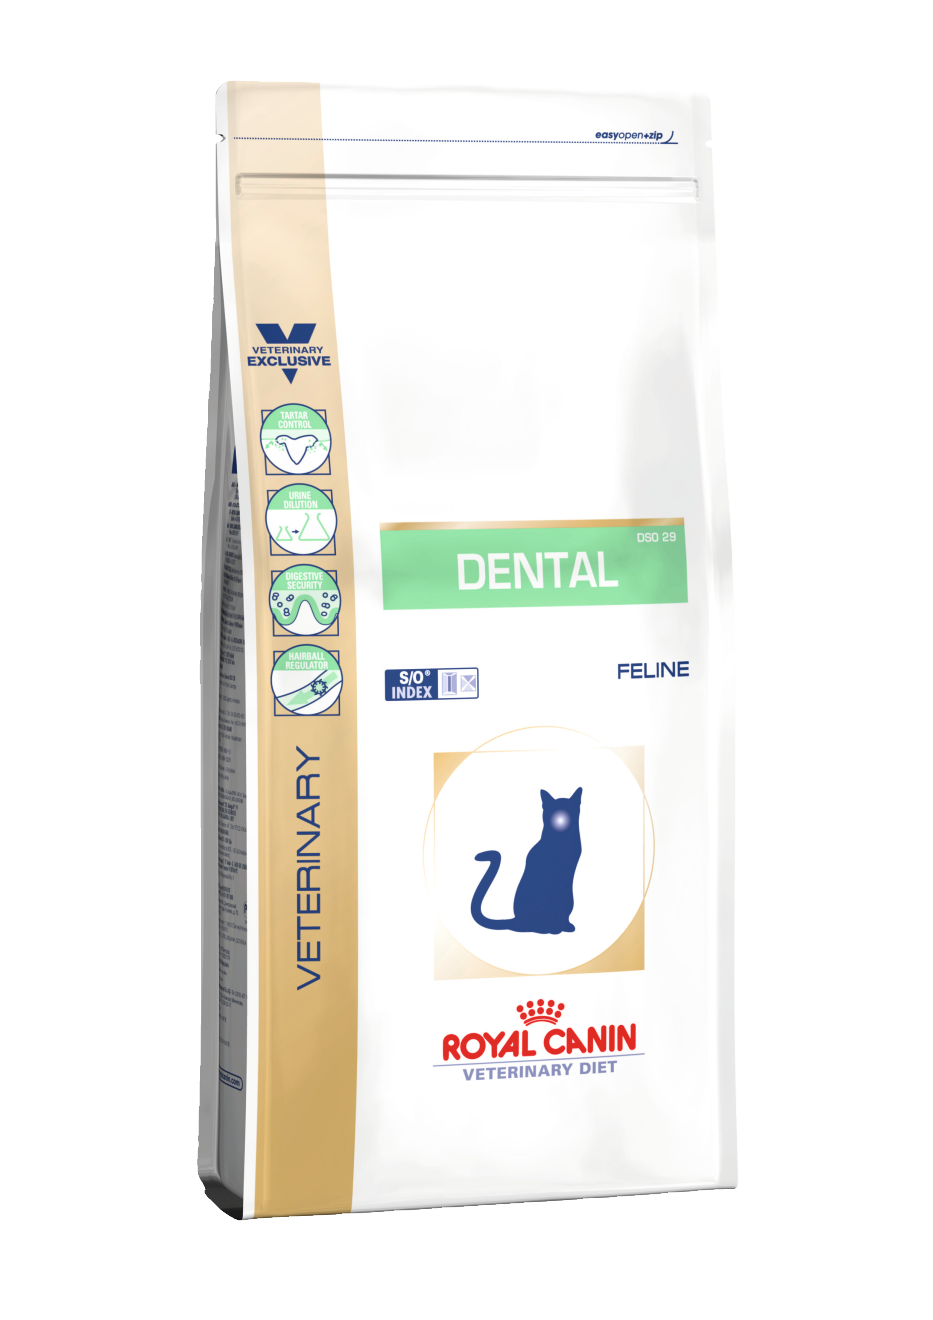 royal canin dental cat food